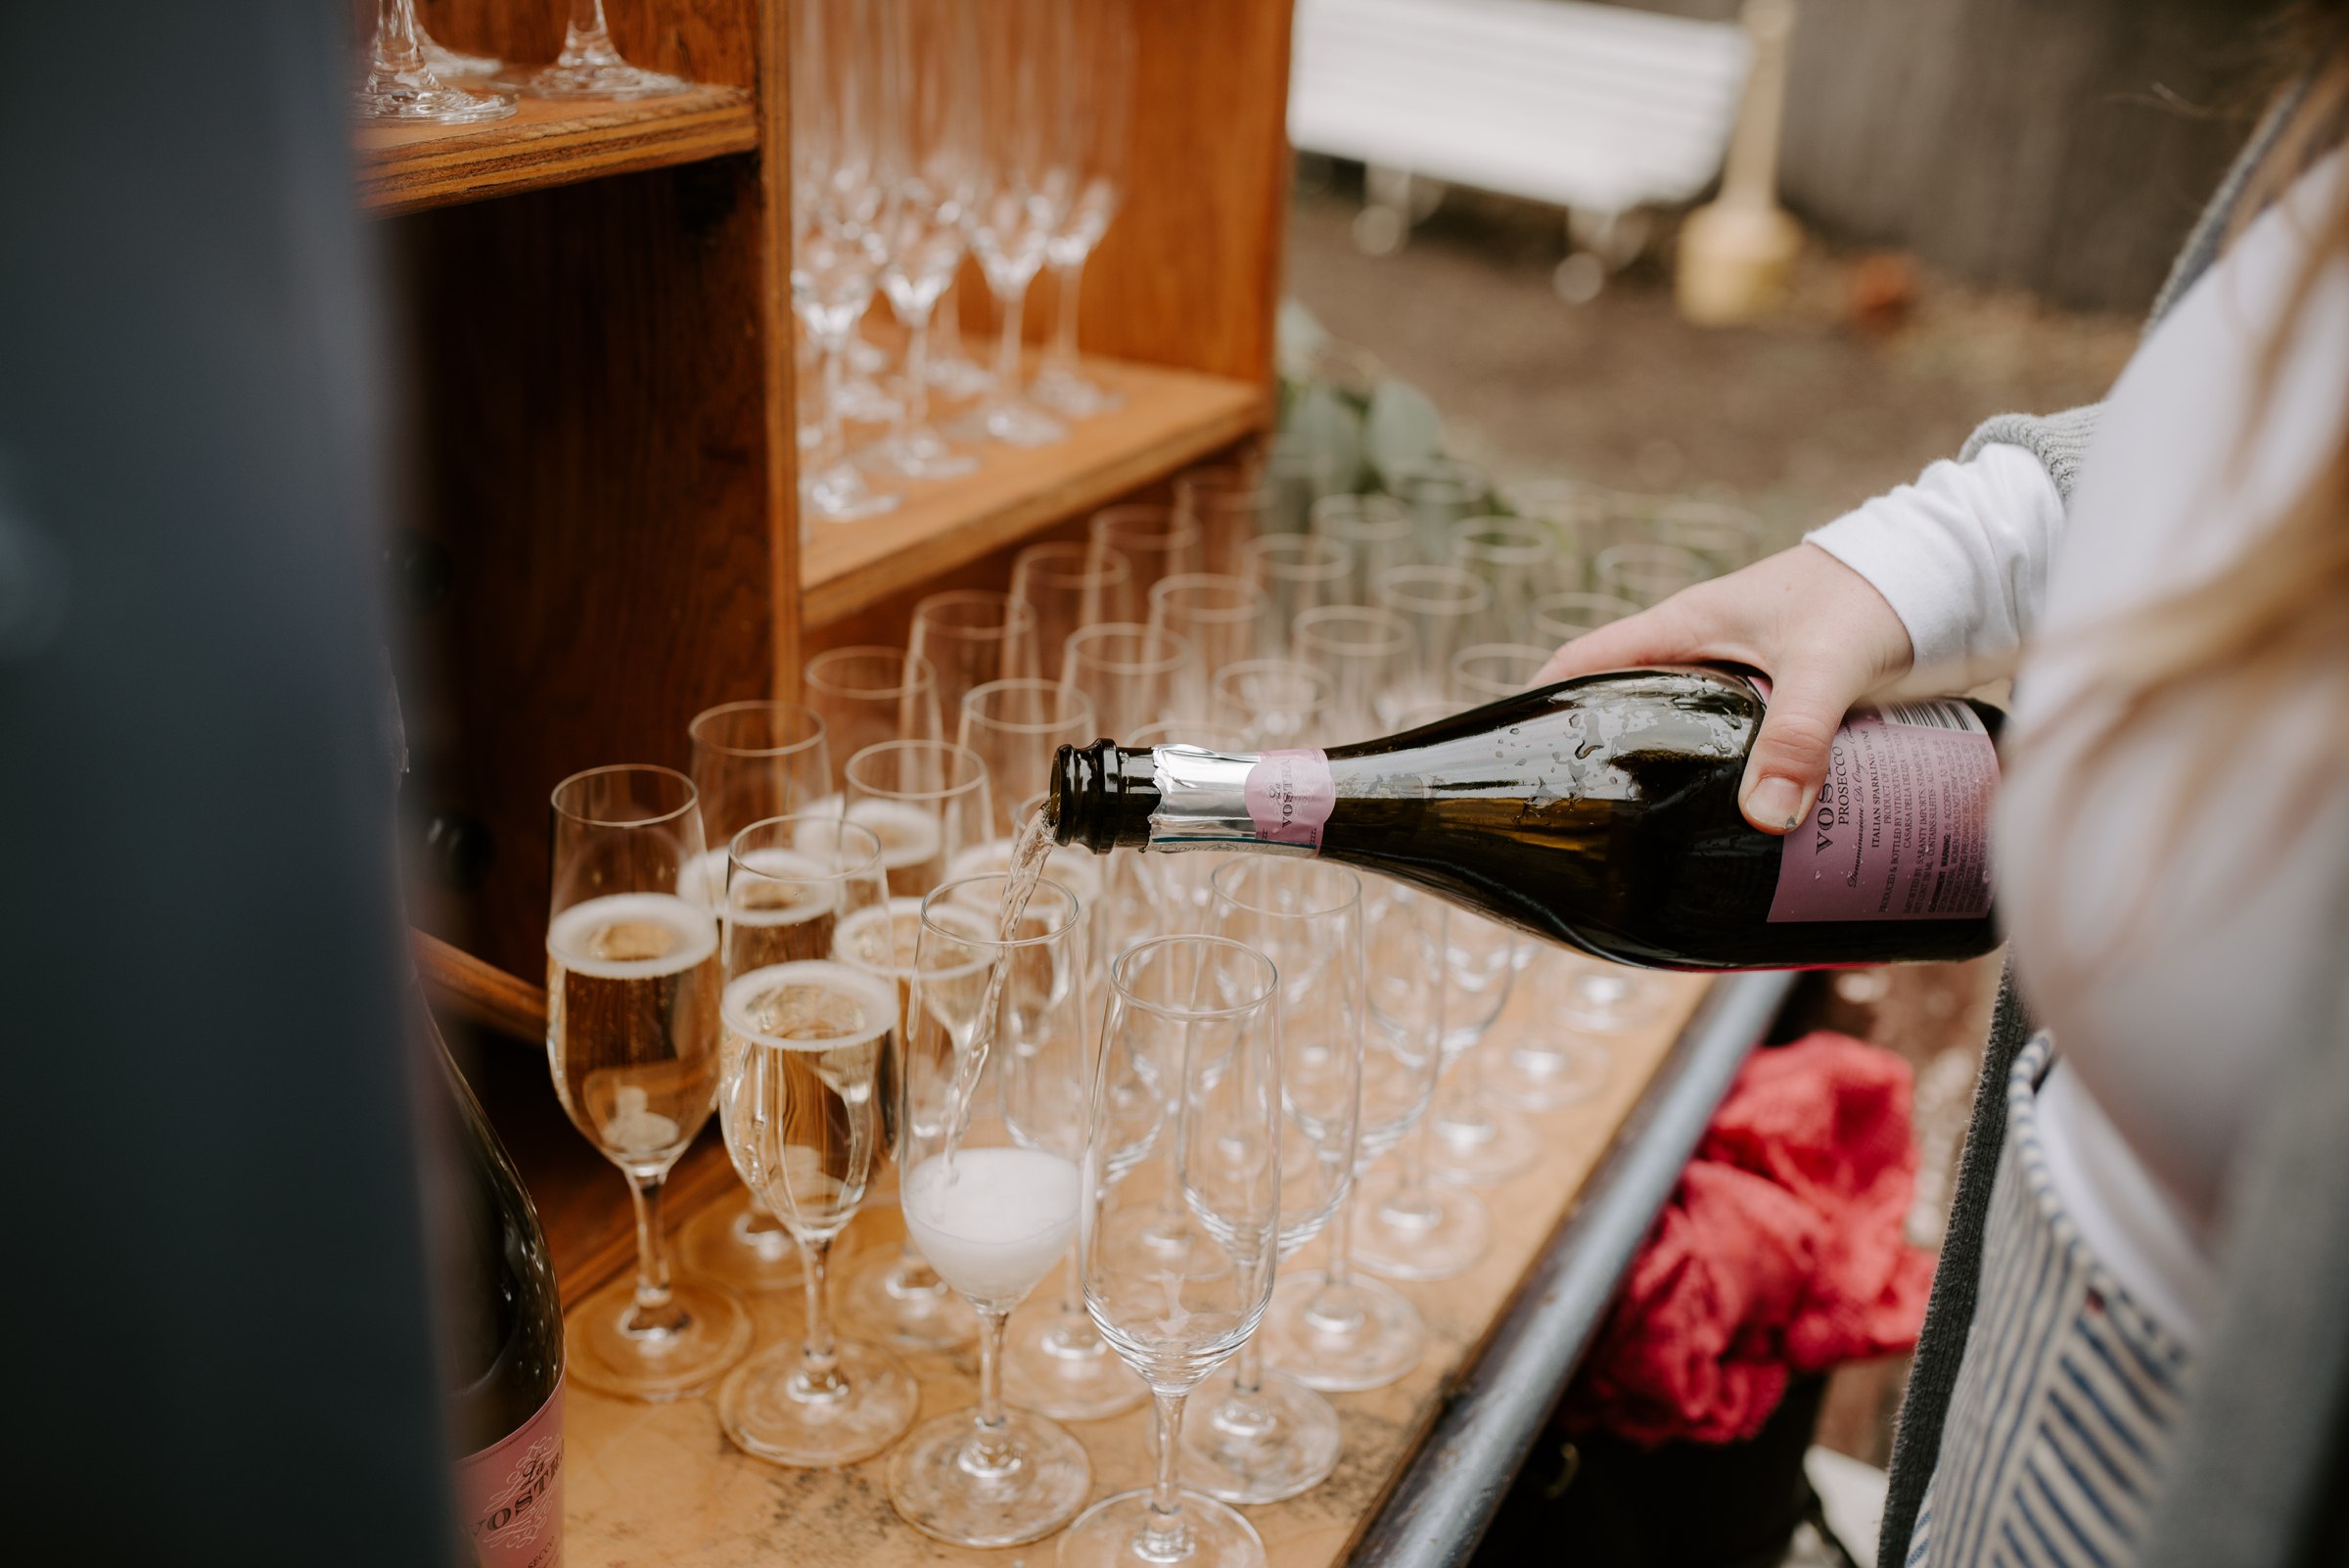  champagne cart wedding details vuka collective austin texas 